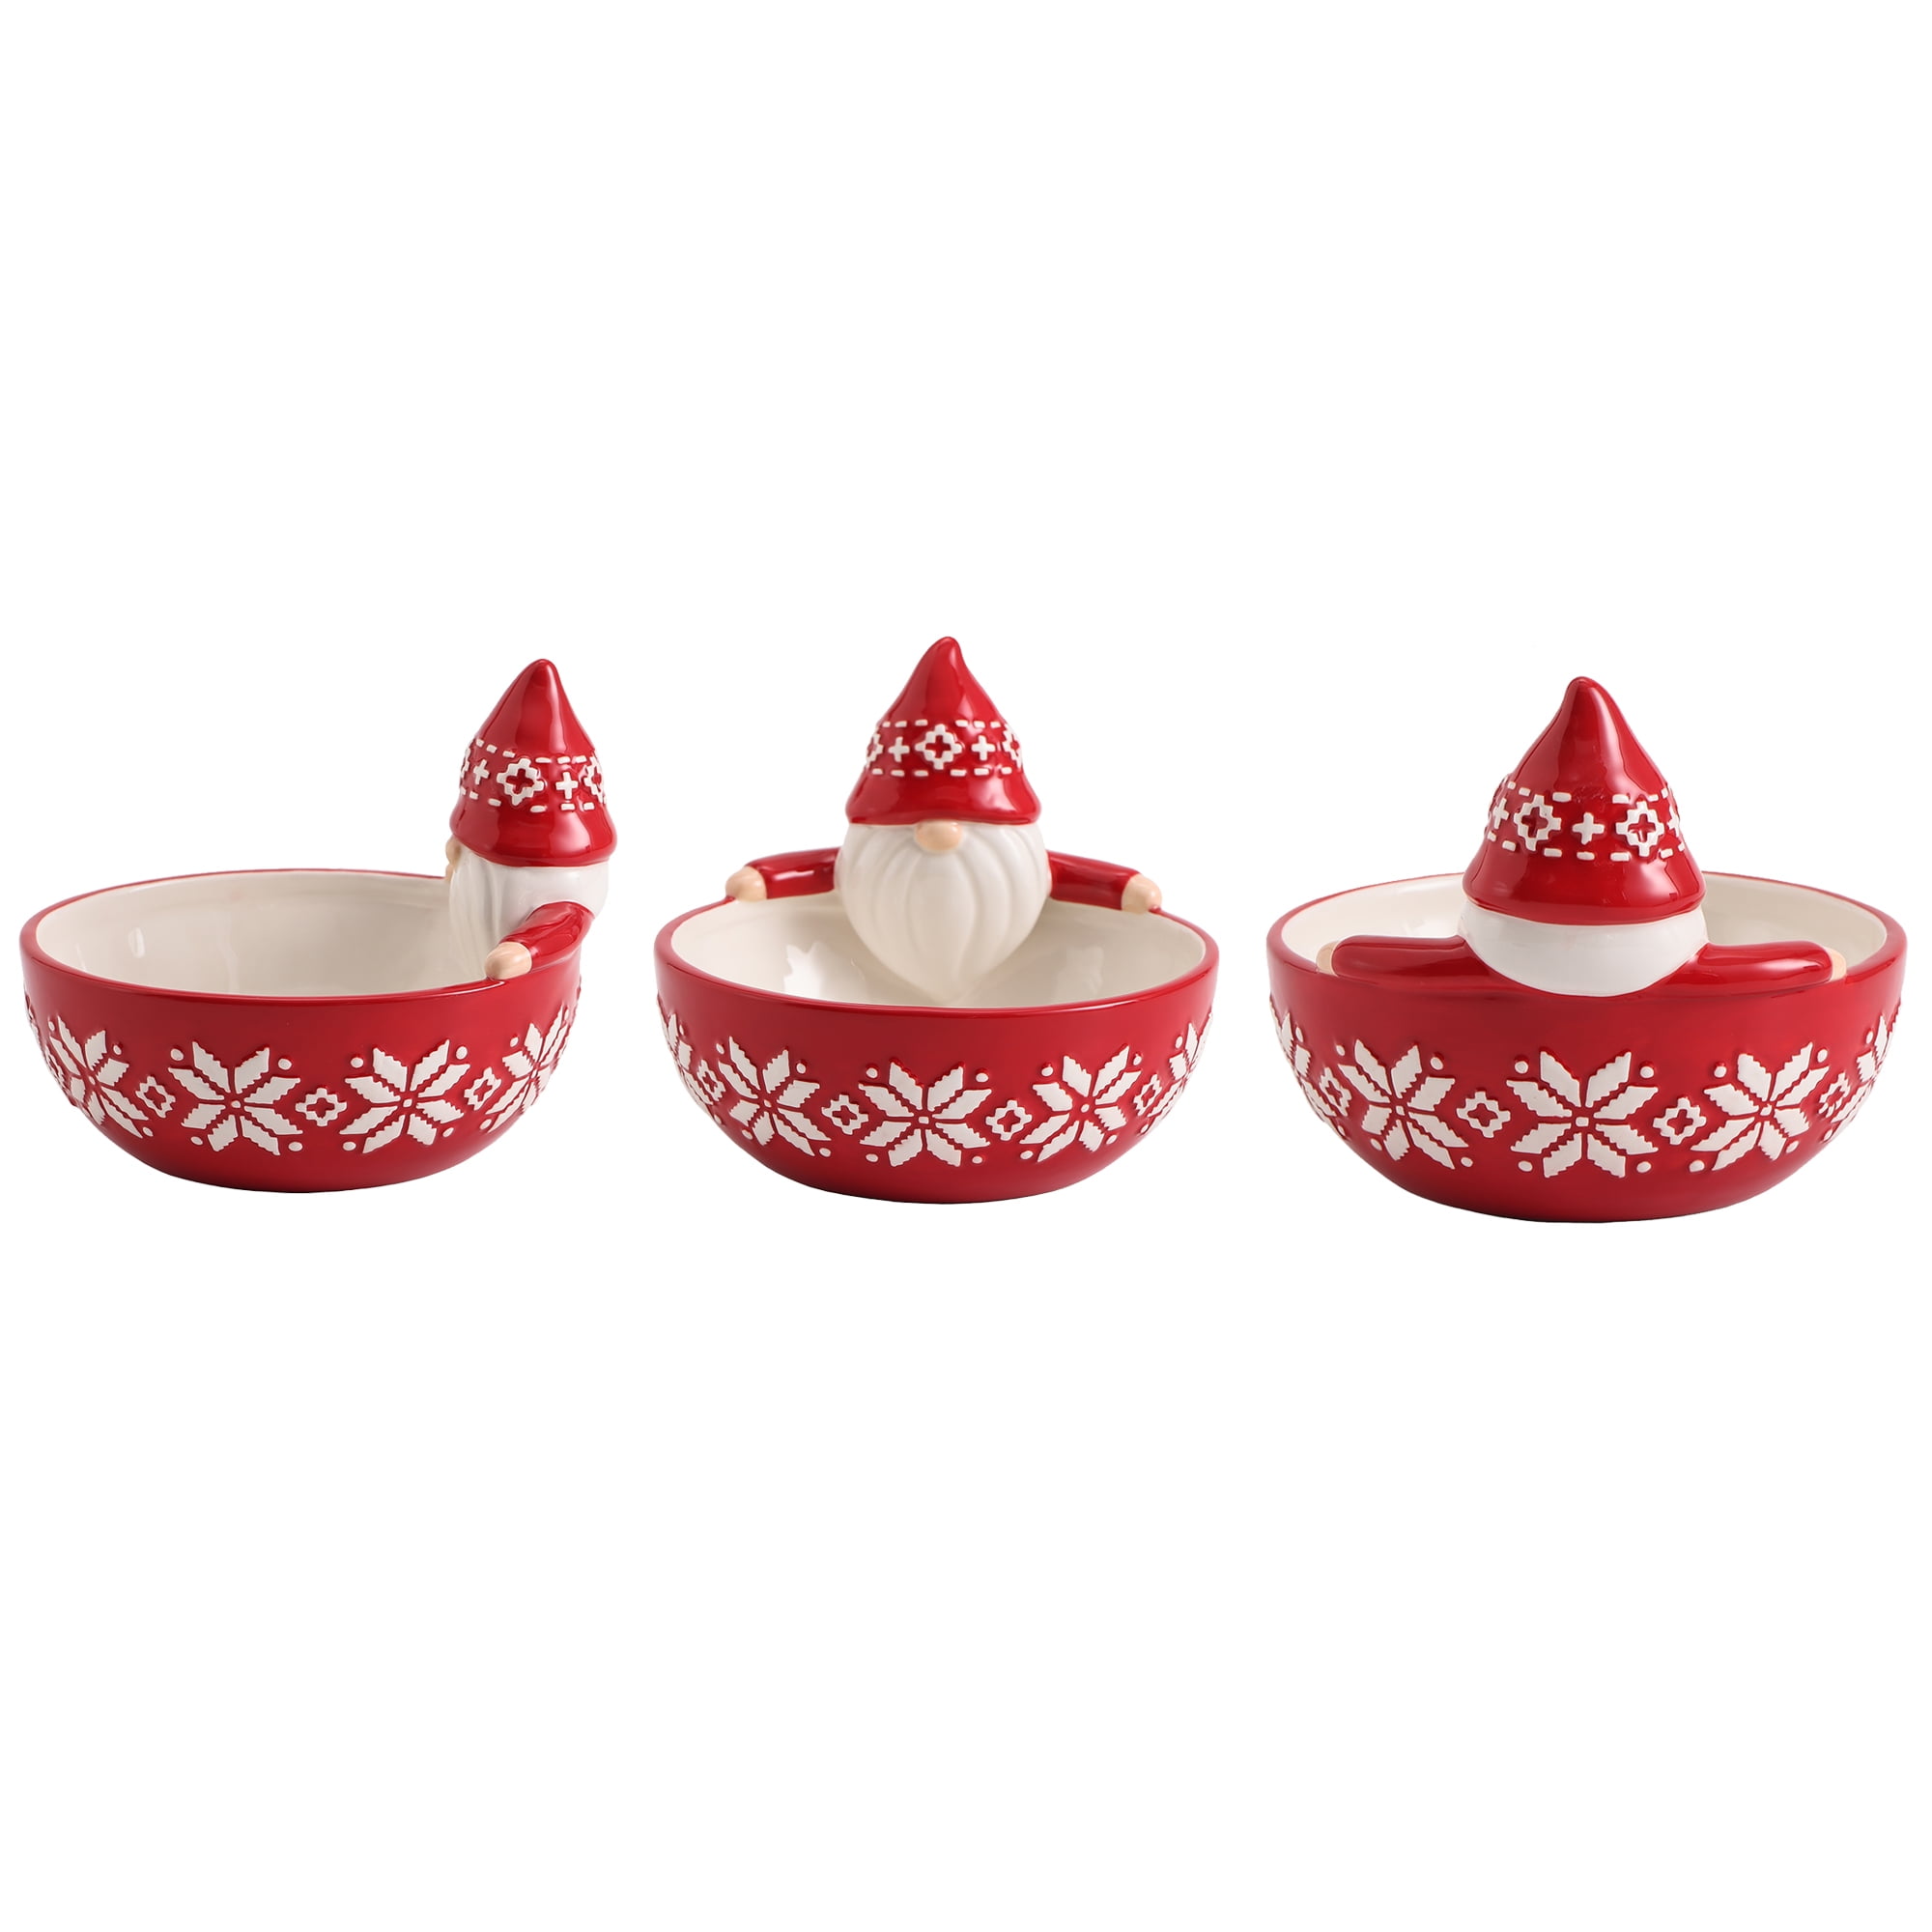 Bico Ceramic Red & Blue Christmas Gnome 15oz Mugs Set, Handpainted, Microwave & Dishwasher Safe, Size: 2 Unit 5.5*3.7 inch (15 oz), Multicolor